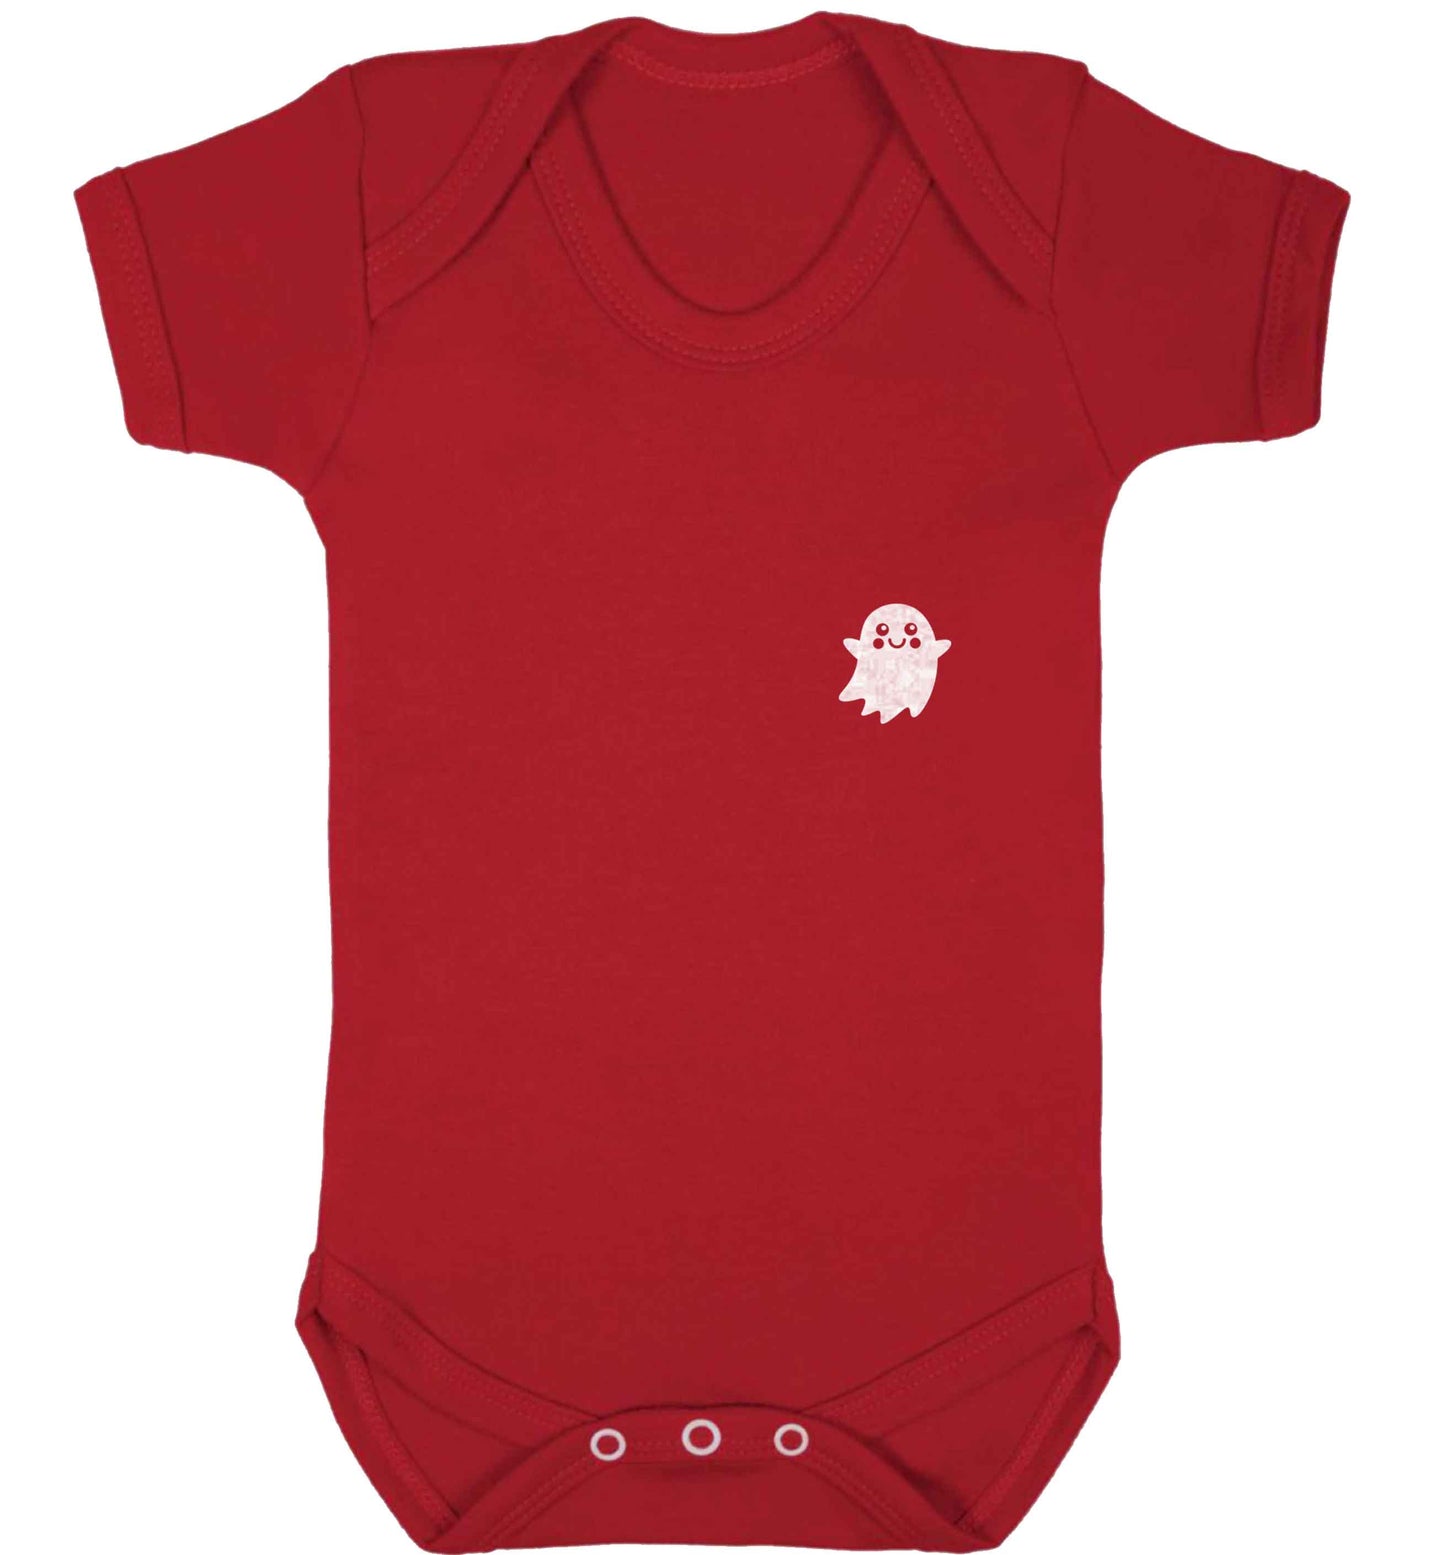 Pocket ghost baby vest red 18-24 months